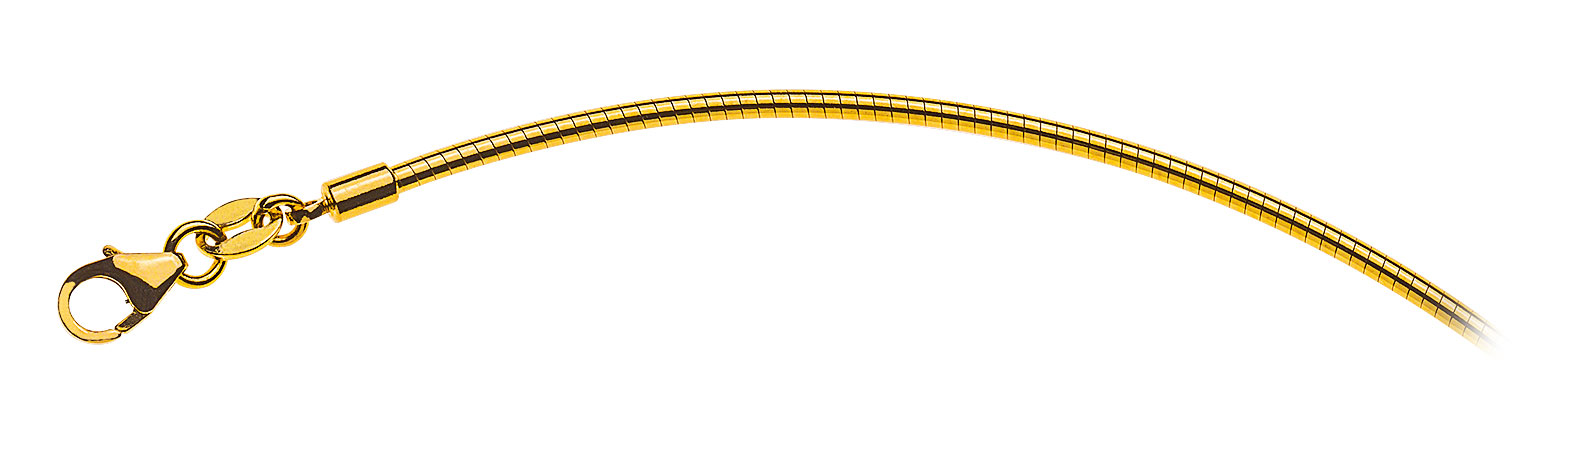 AURONOS Prestige Necklace yellow gold 18K omega chain 42cm 1.8mm